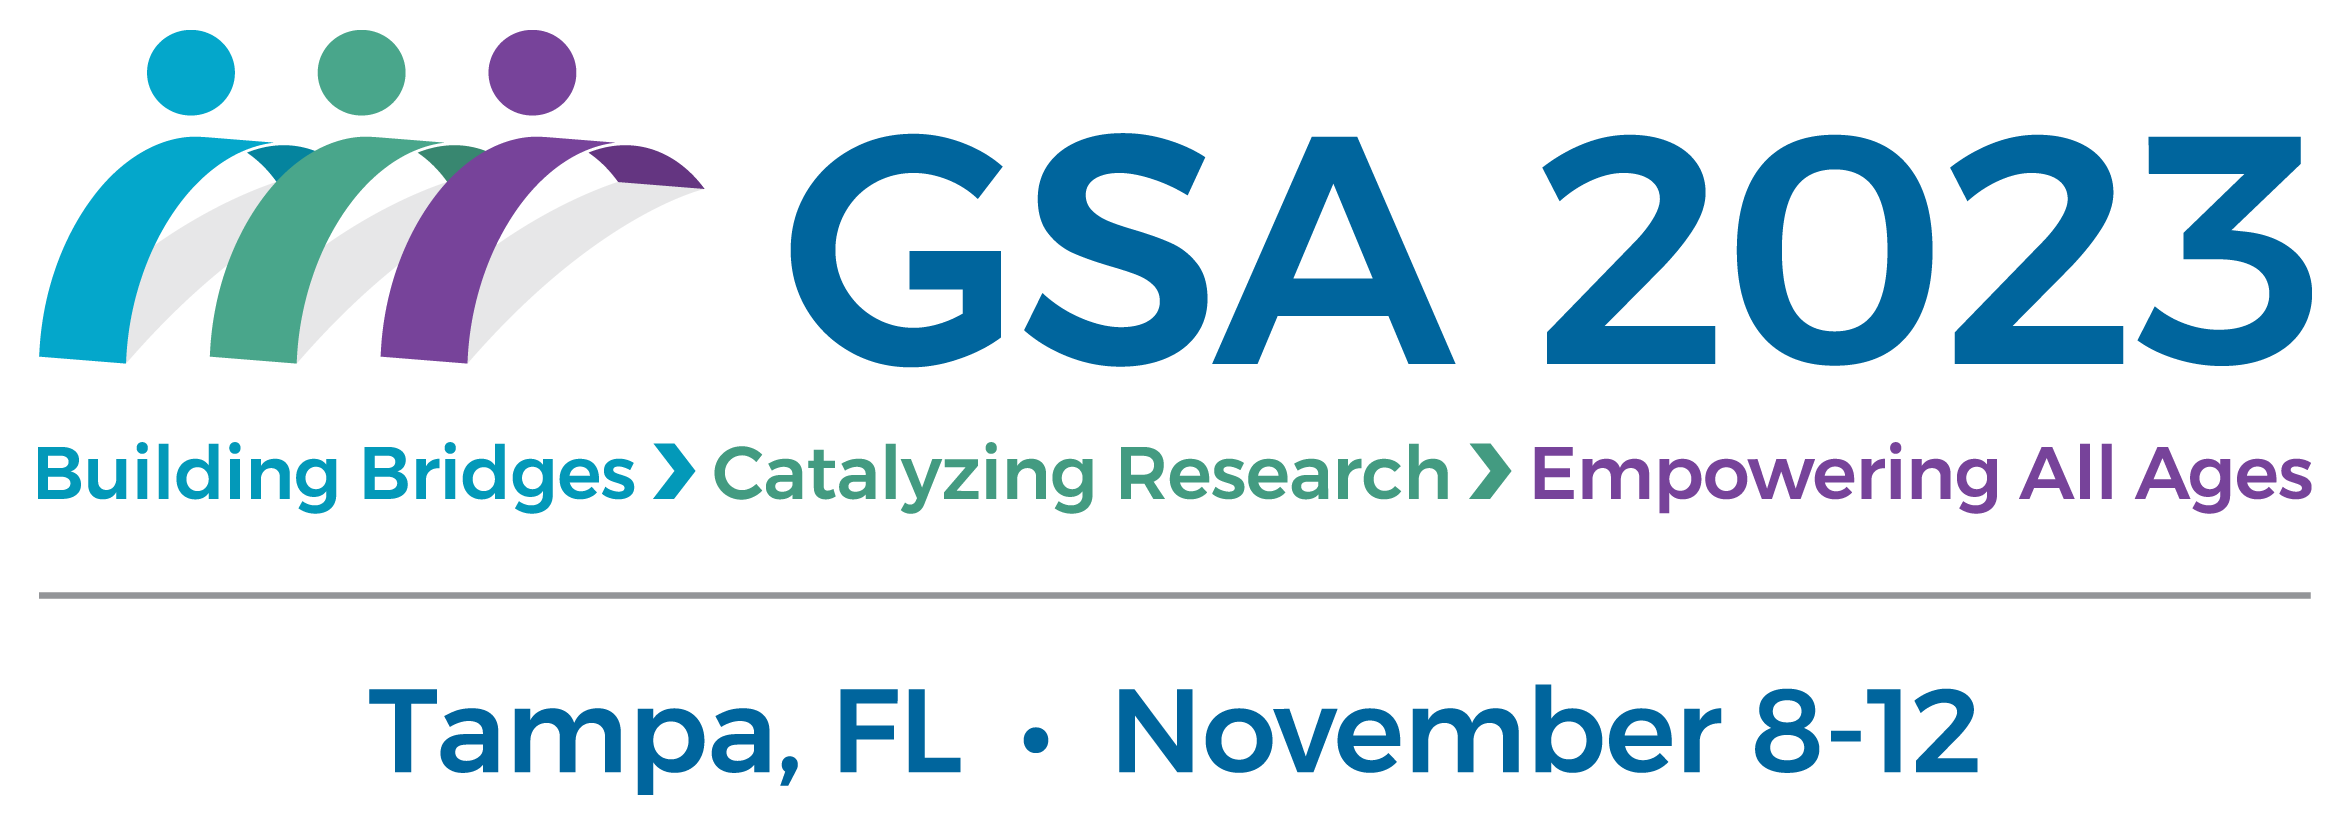 Gerontological Society of America (GSA) Annual Meeting 2023 logo